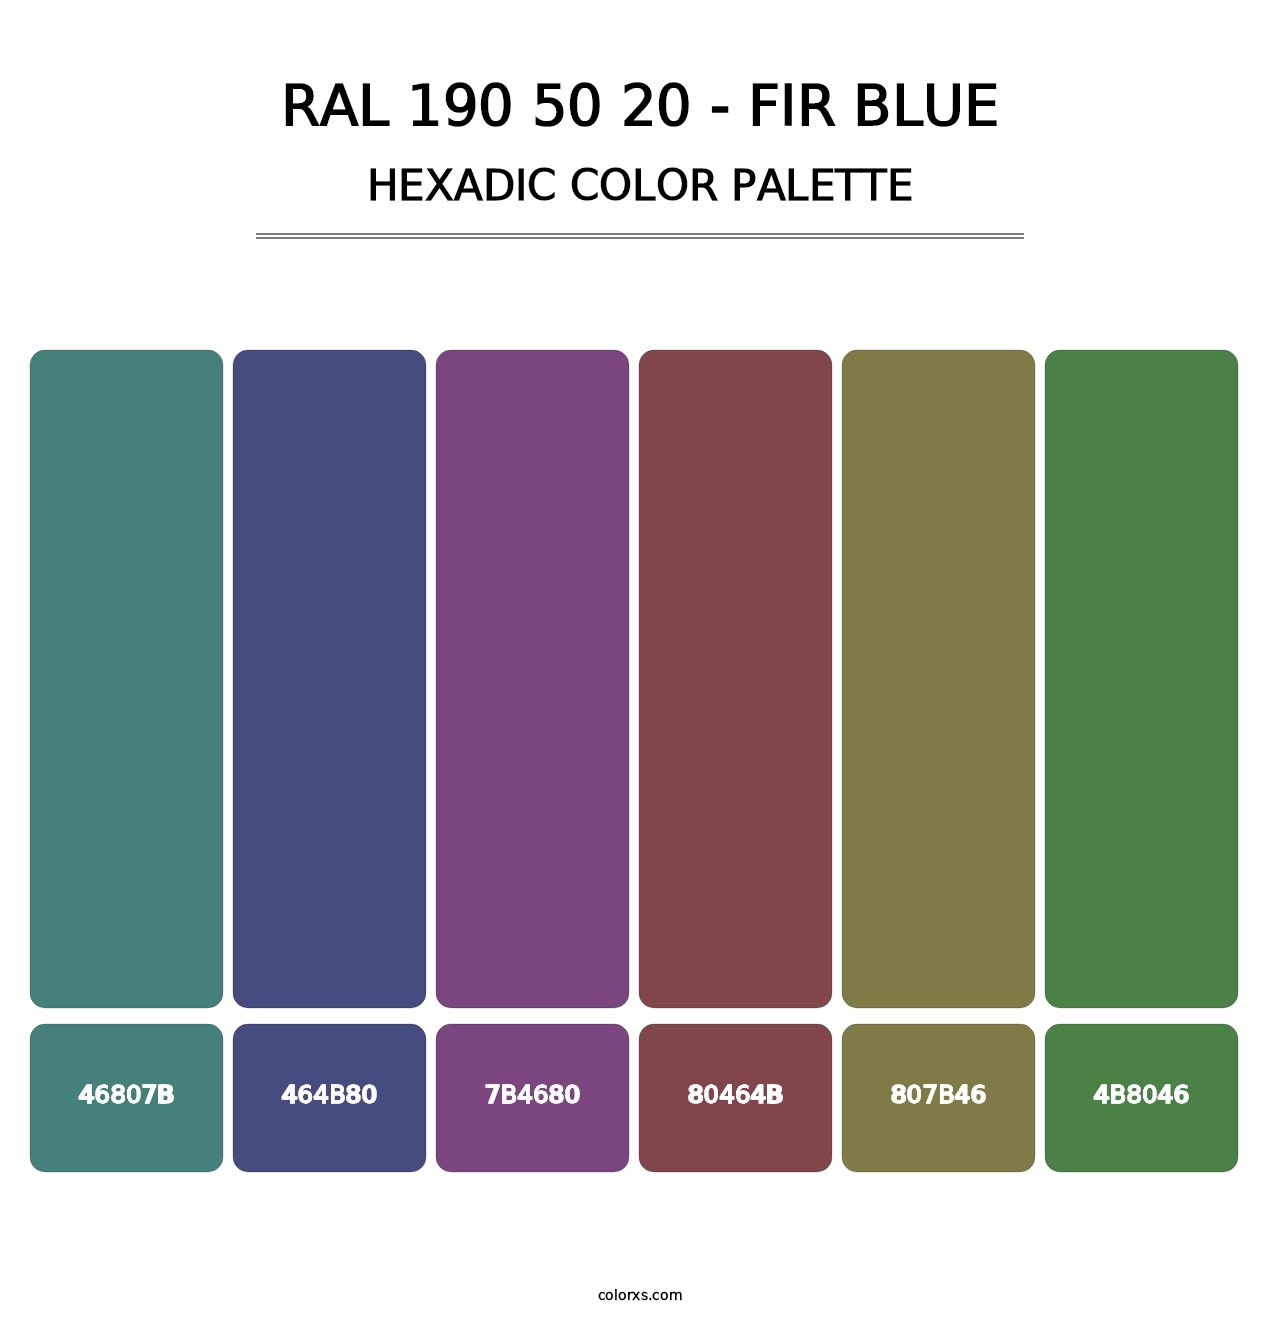 RAL 190 50 20 - Fir Blue - Hexadic Color Palette